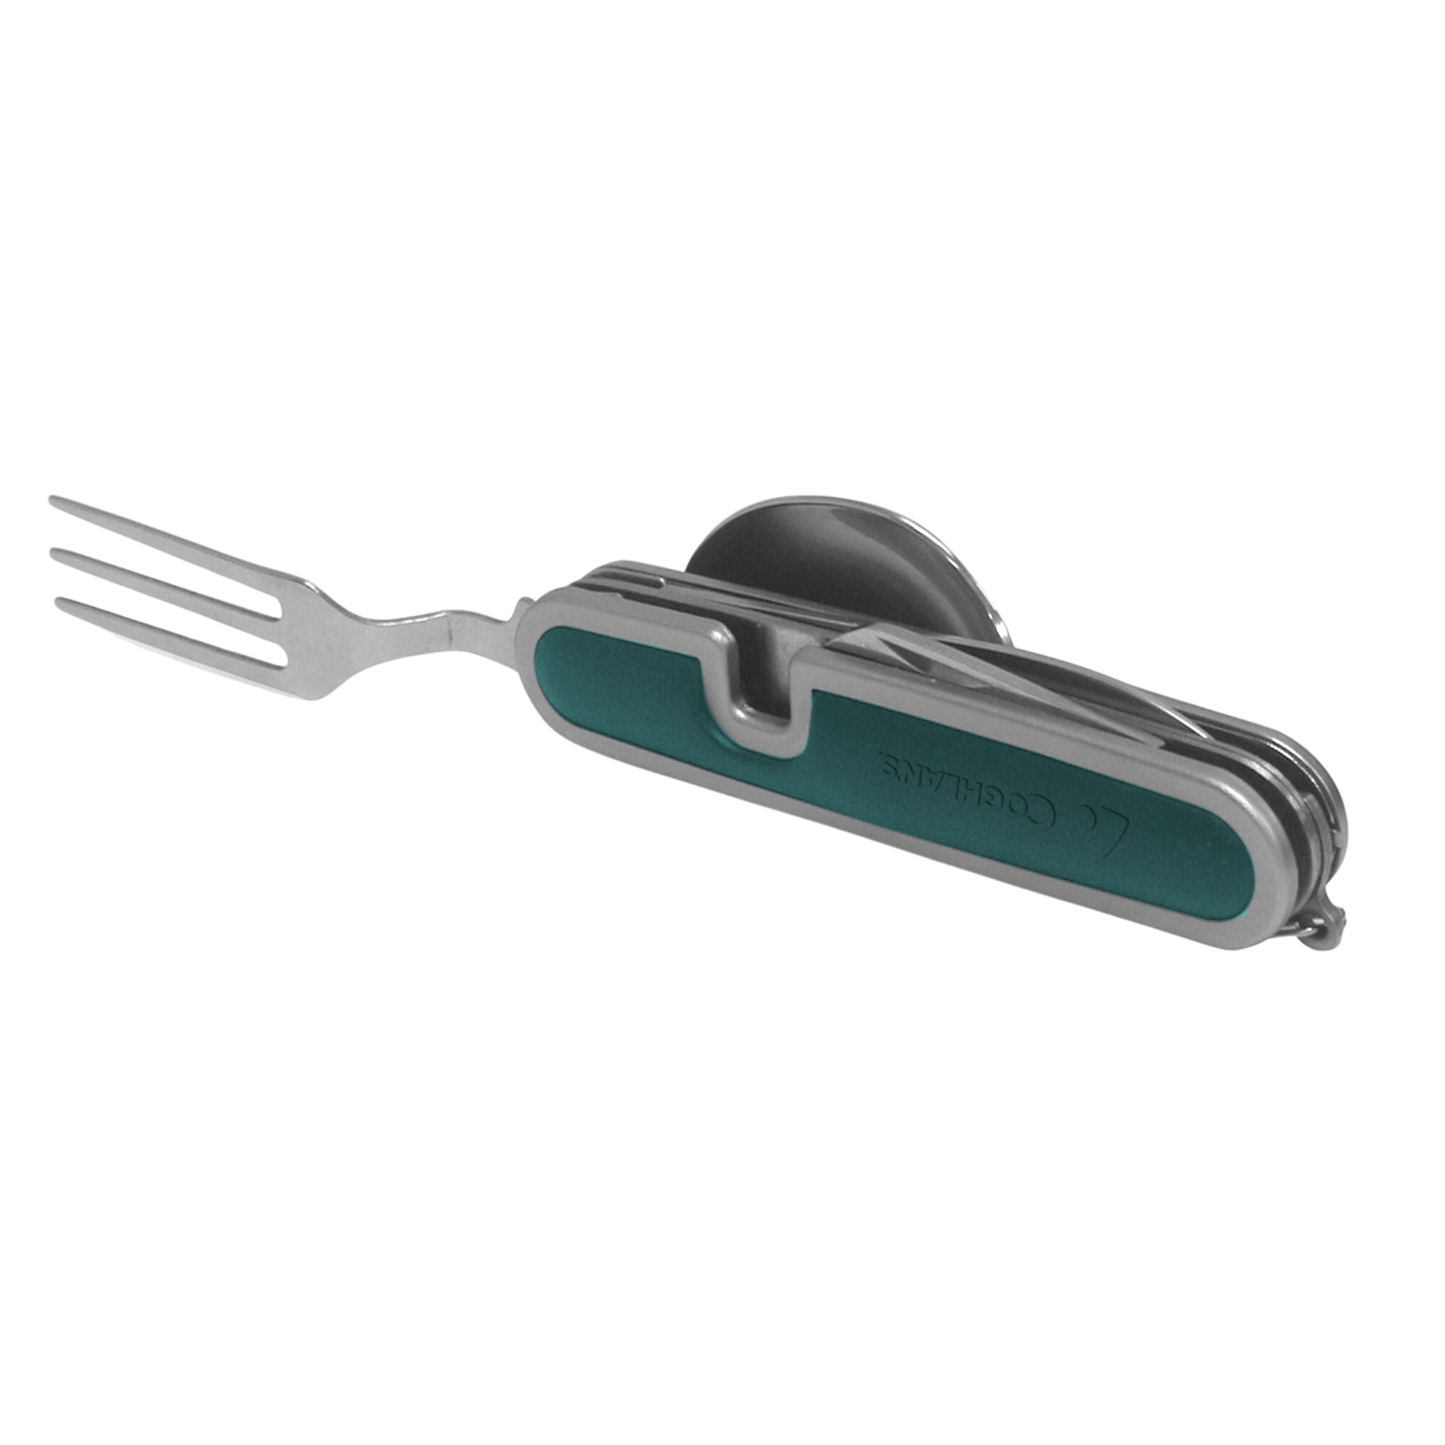 Folding Cutlery Set